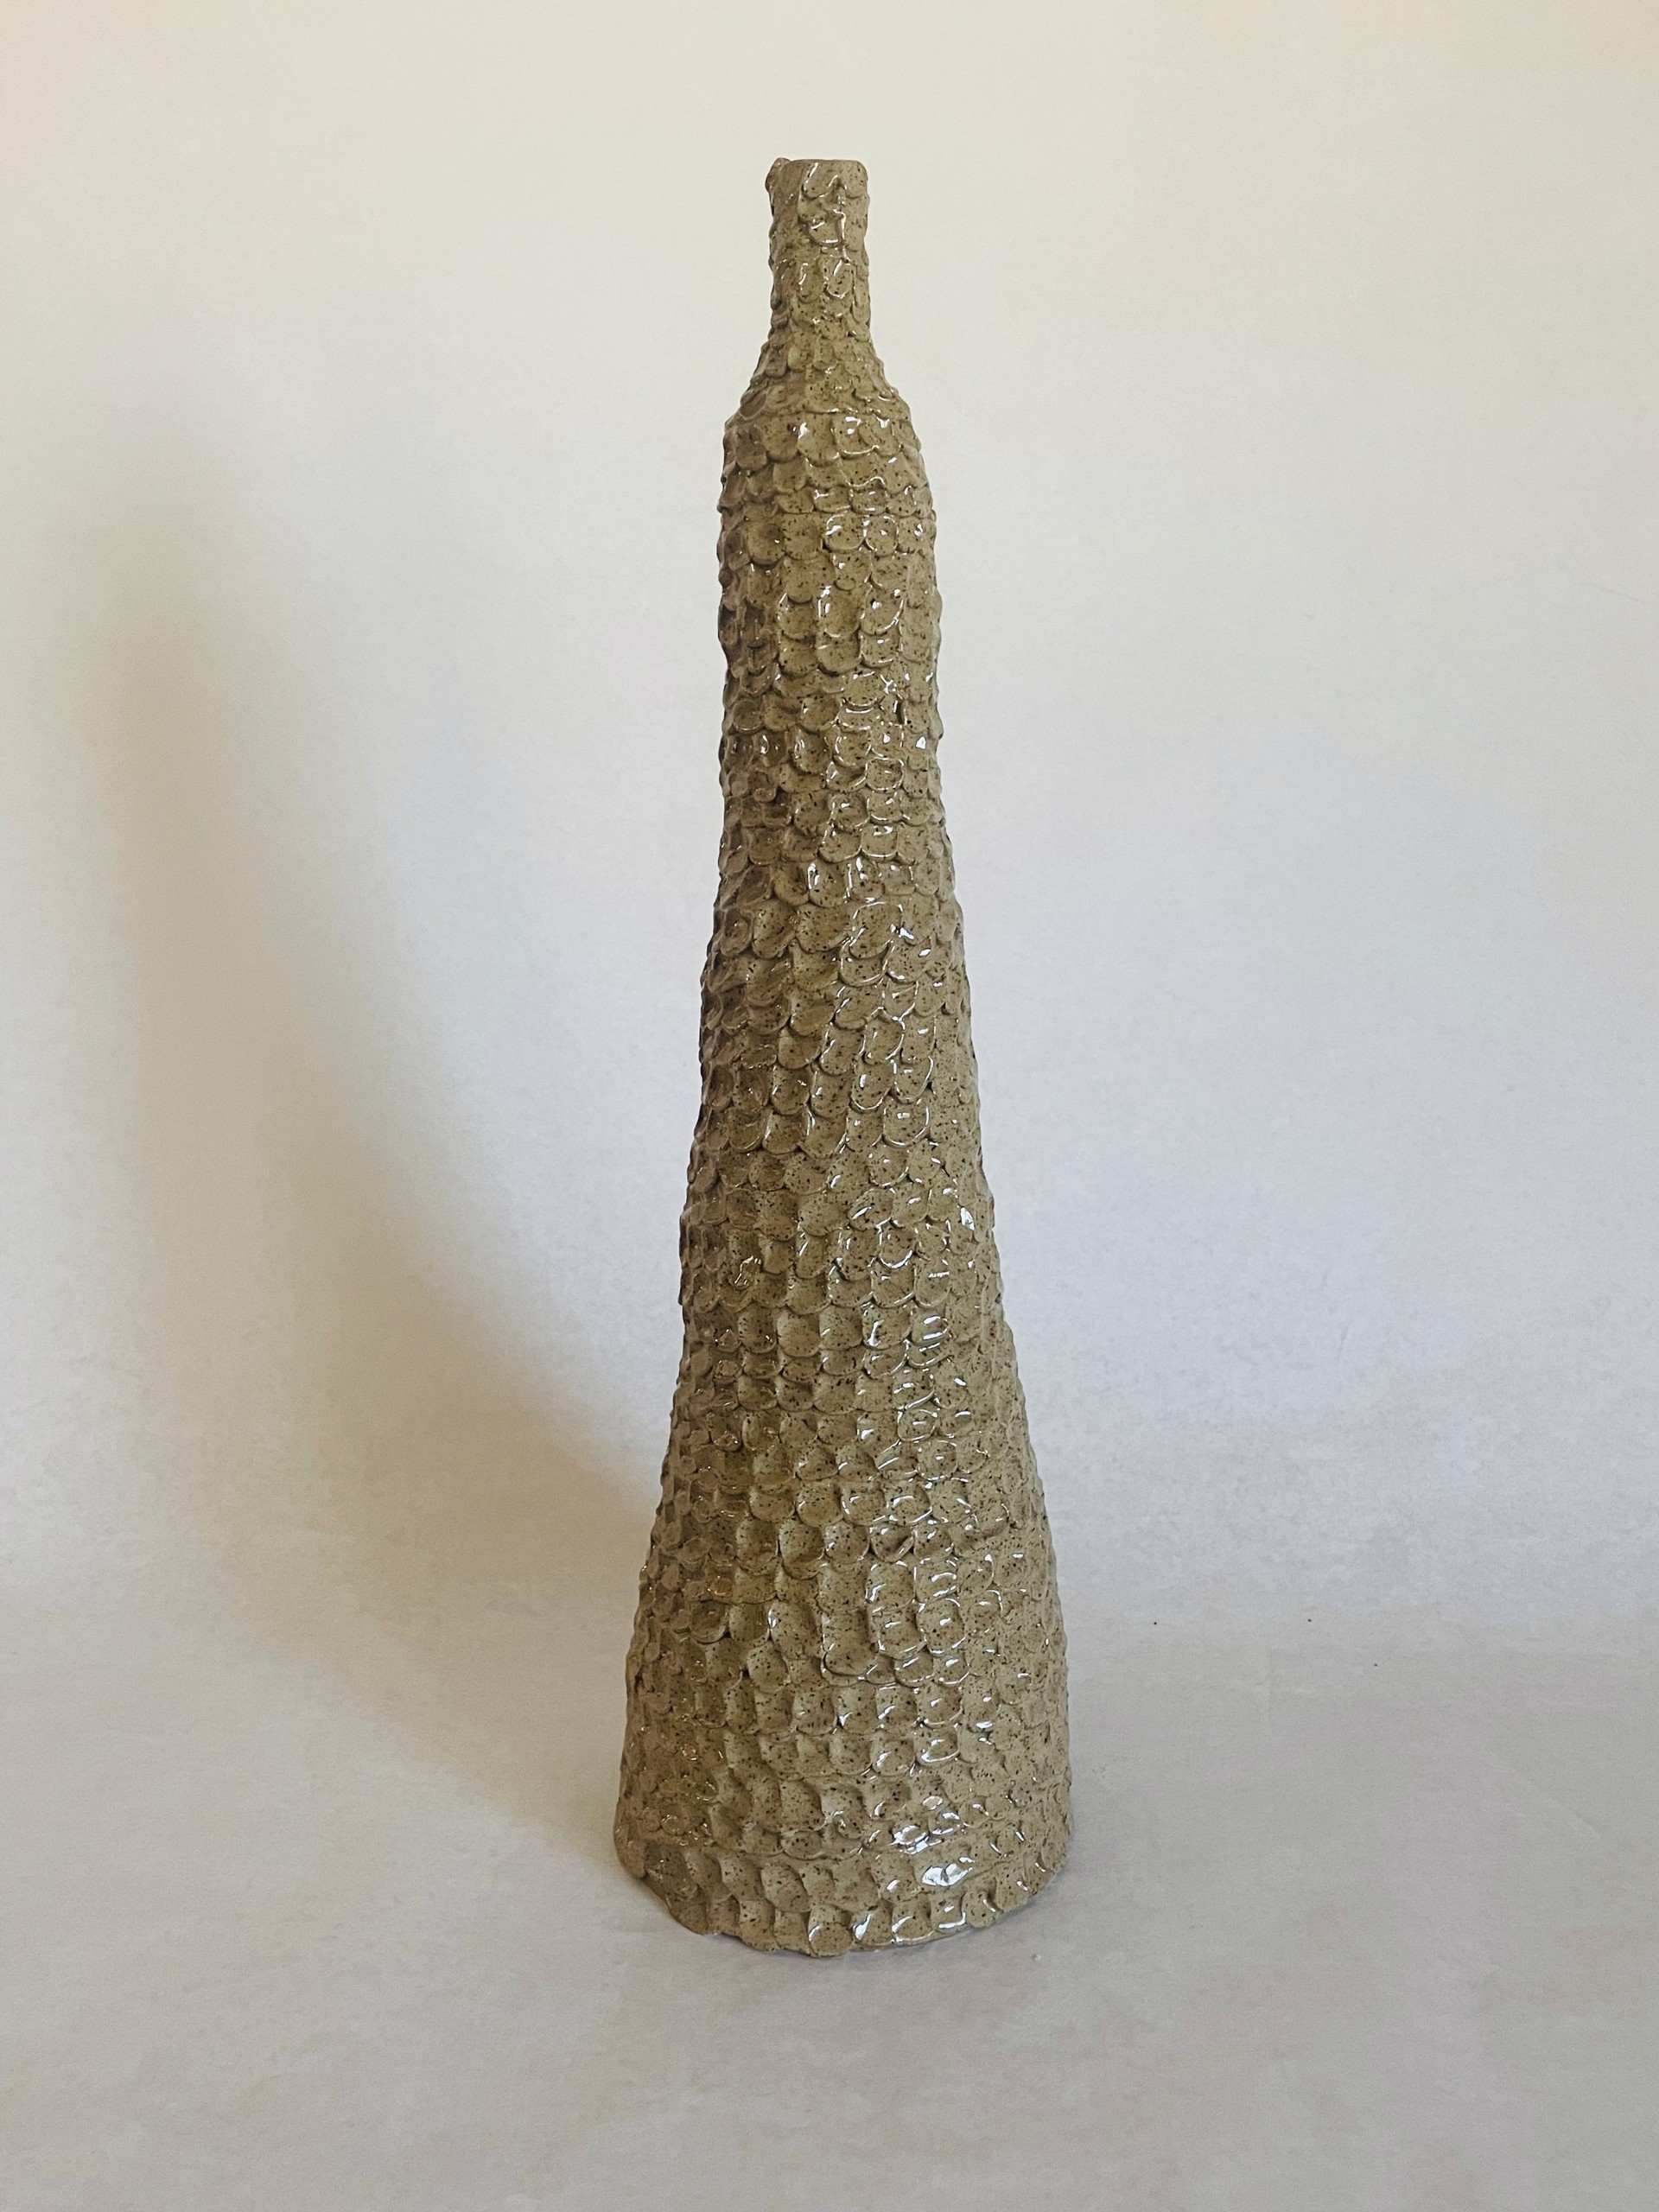 ET Vase 1 by Sarah Hummel Jones